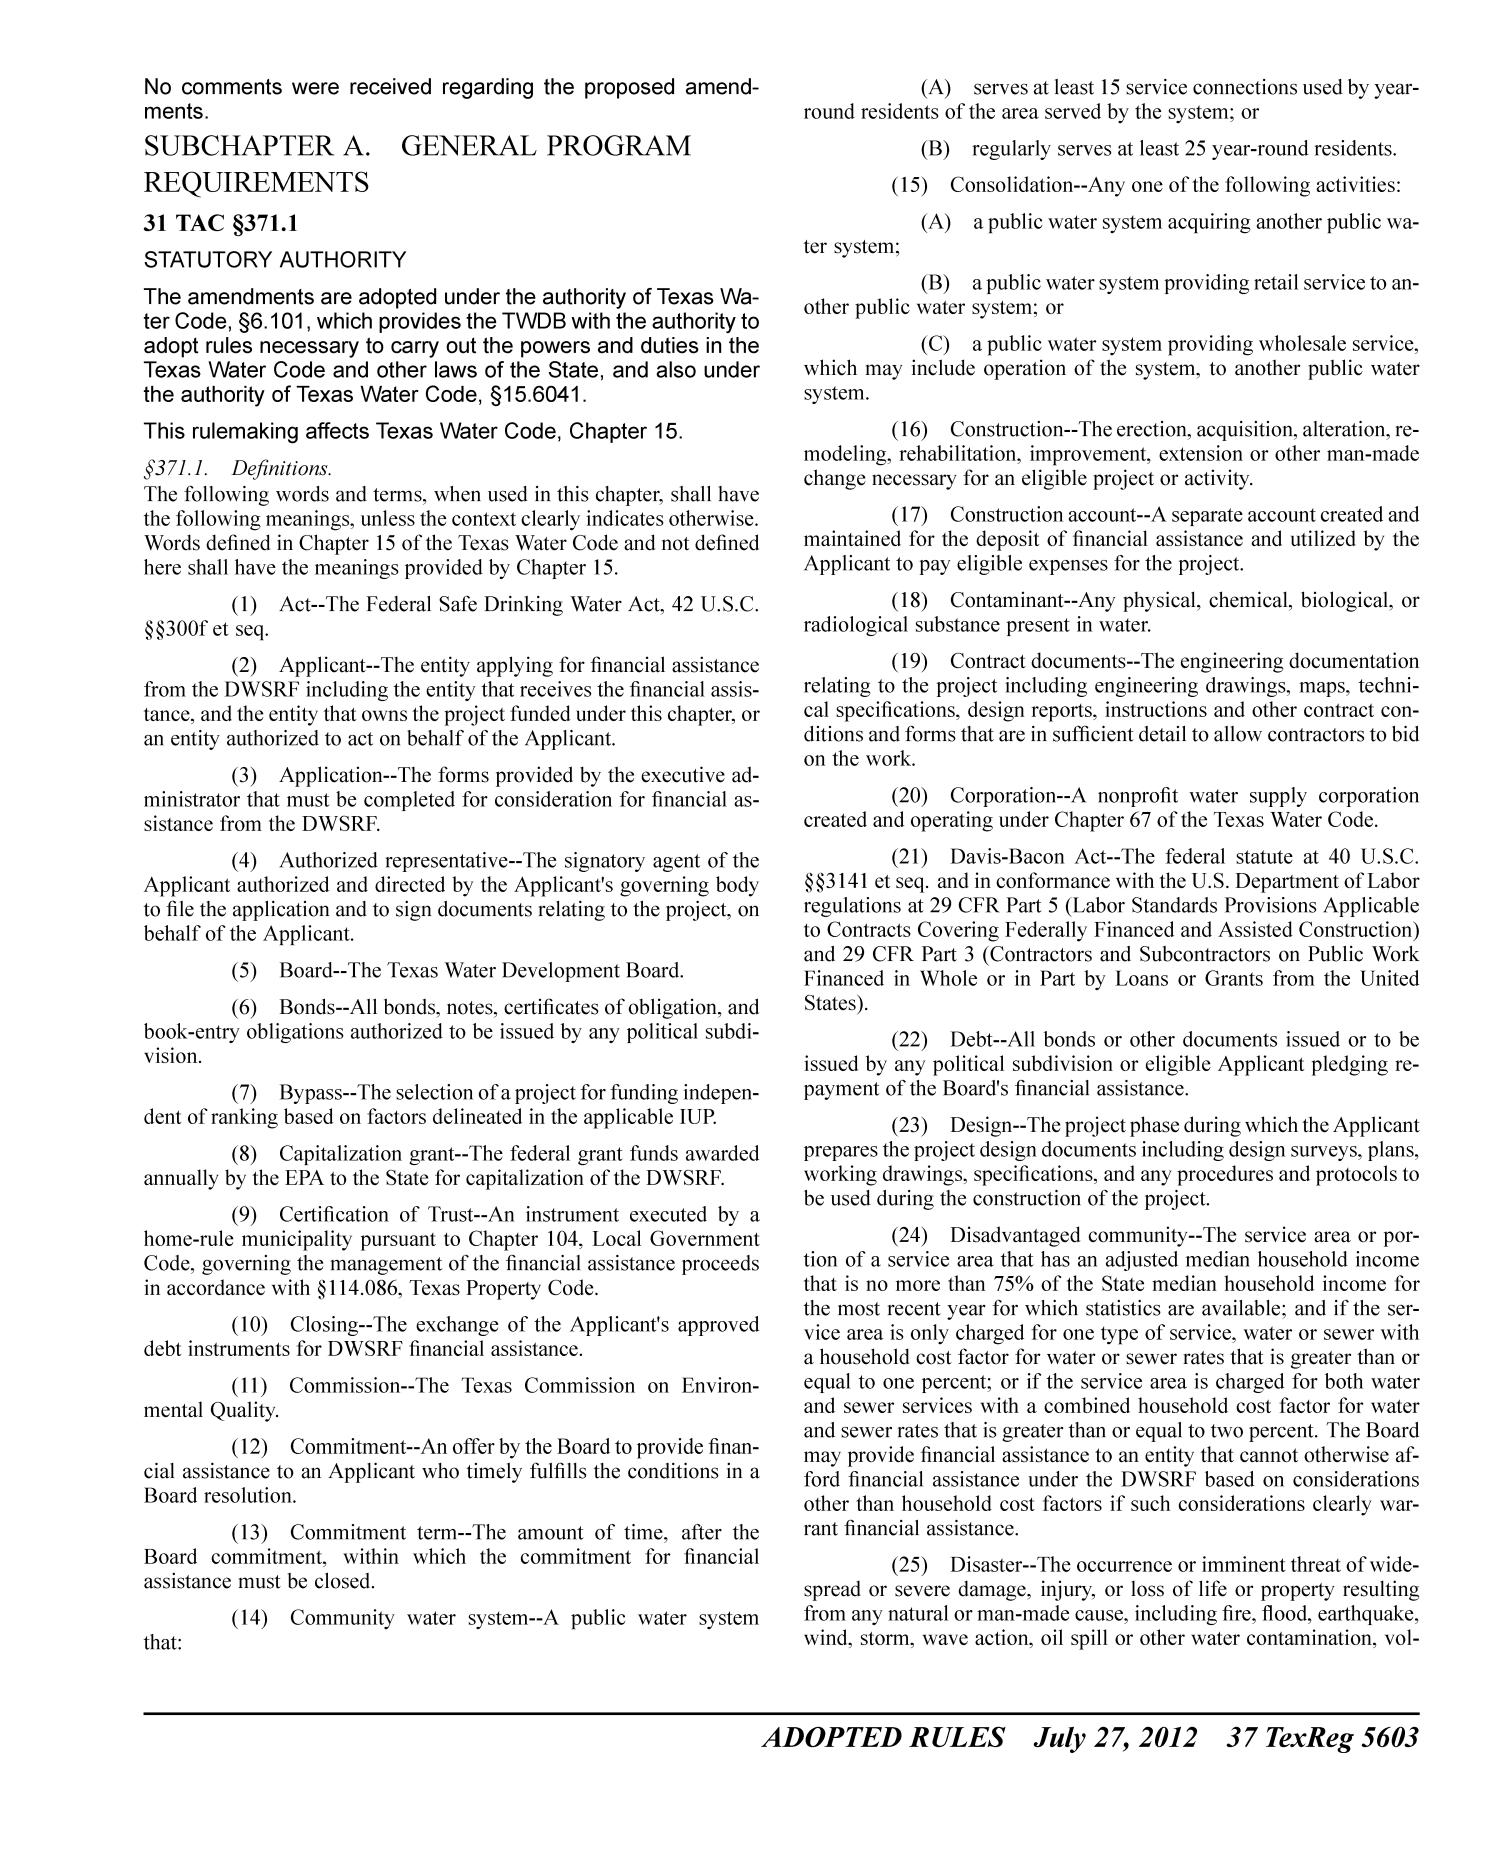 Texas Register, Volume 37, Number 30, Pages 5519-5676, July 27, 2012
                                                
                                                    5603
                                                